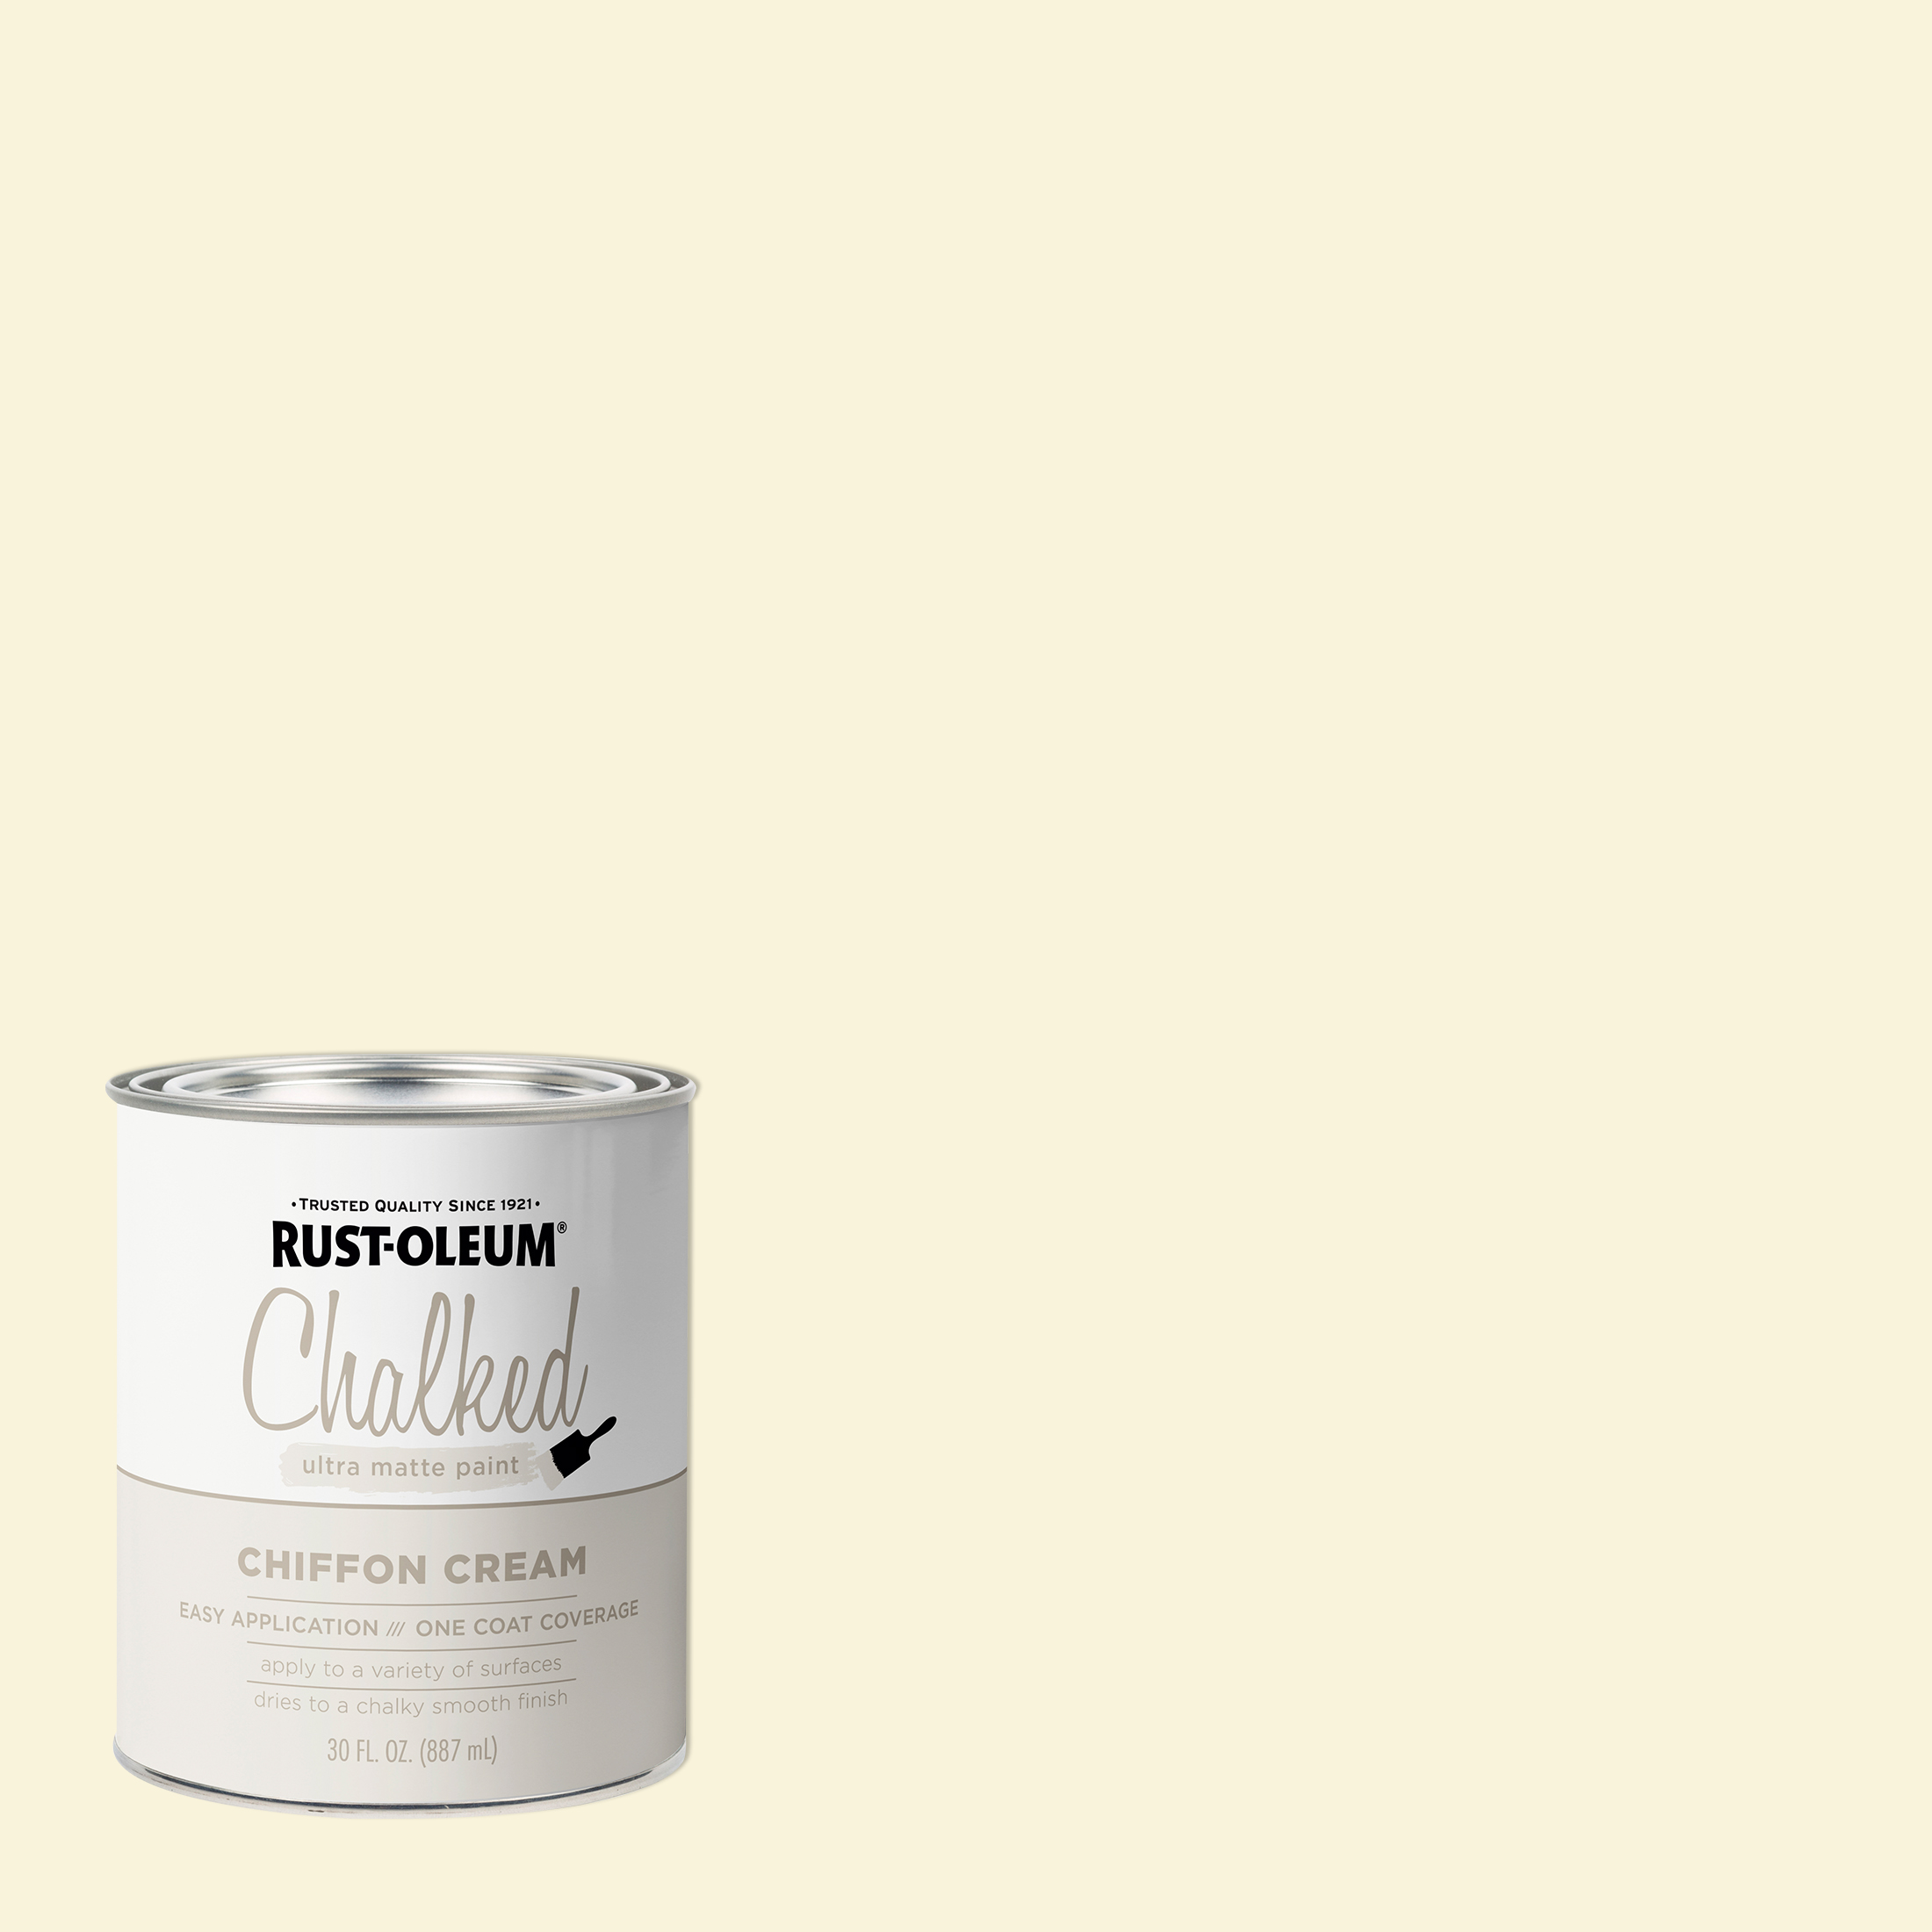 Chiffon Cream, Rust-Oleum Chalked Ultra Matte Paint, Quart - image 1 of 10